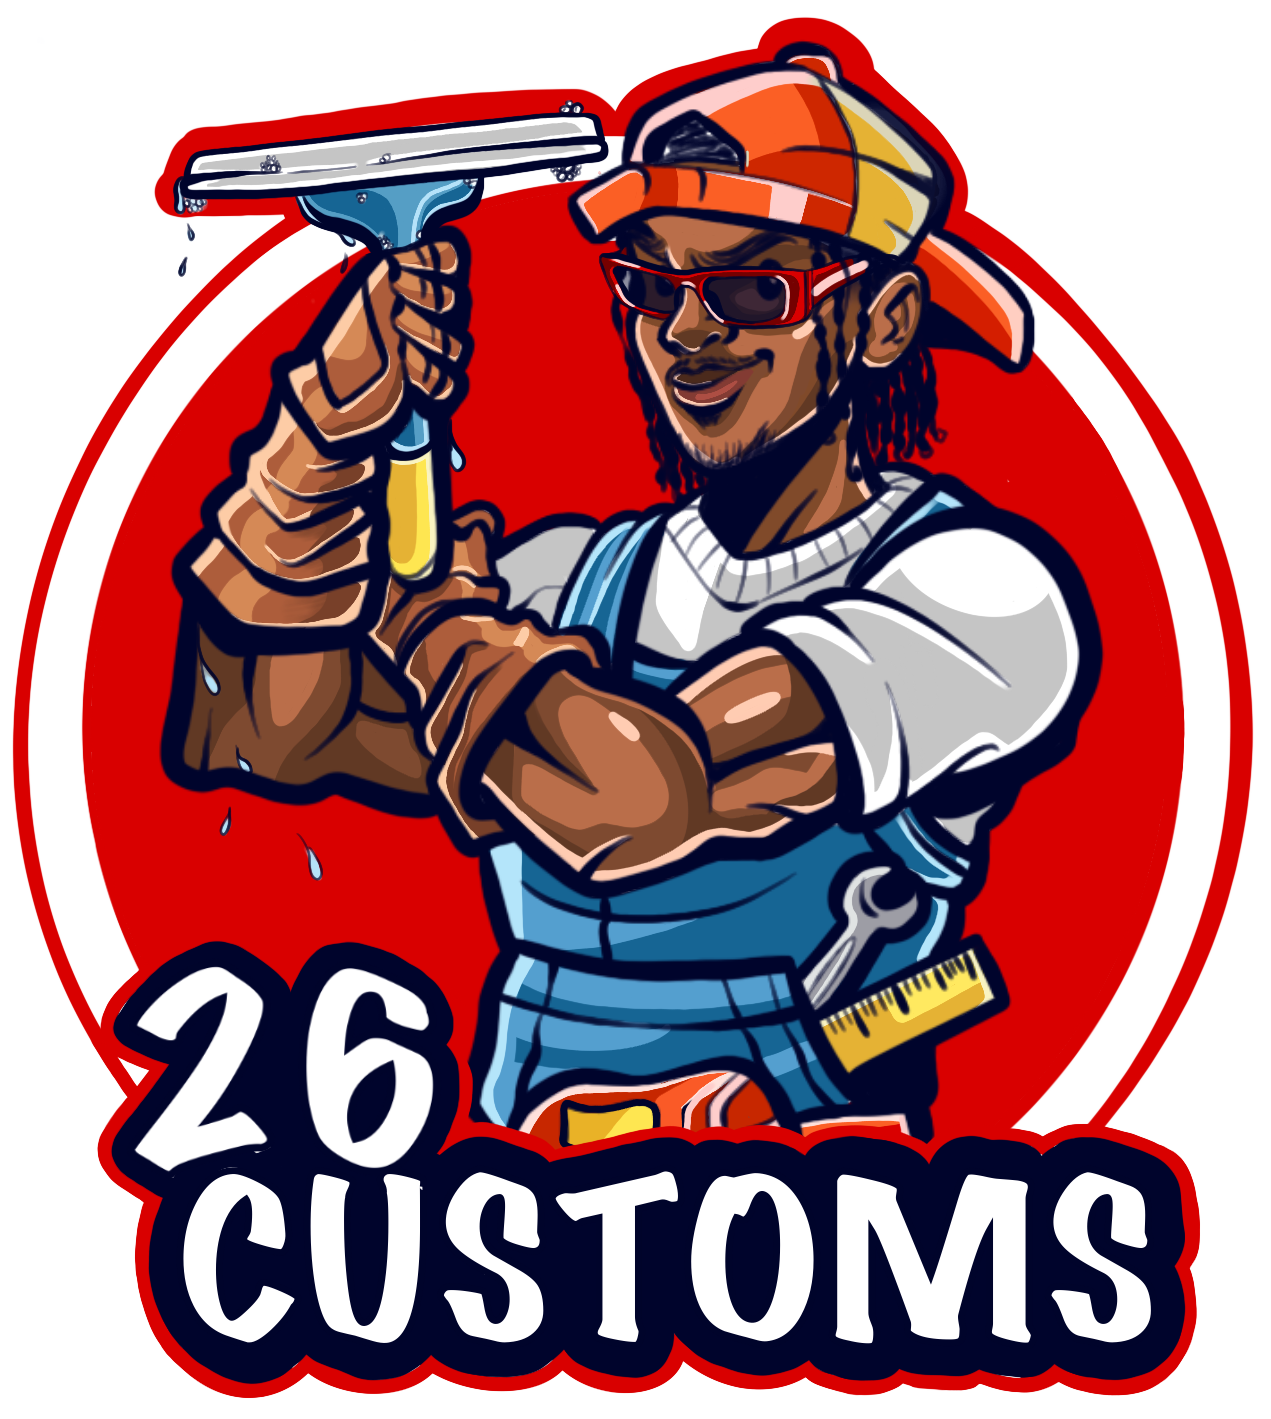 26 Customs